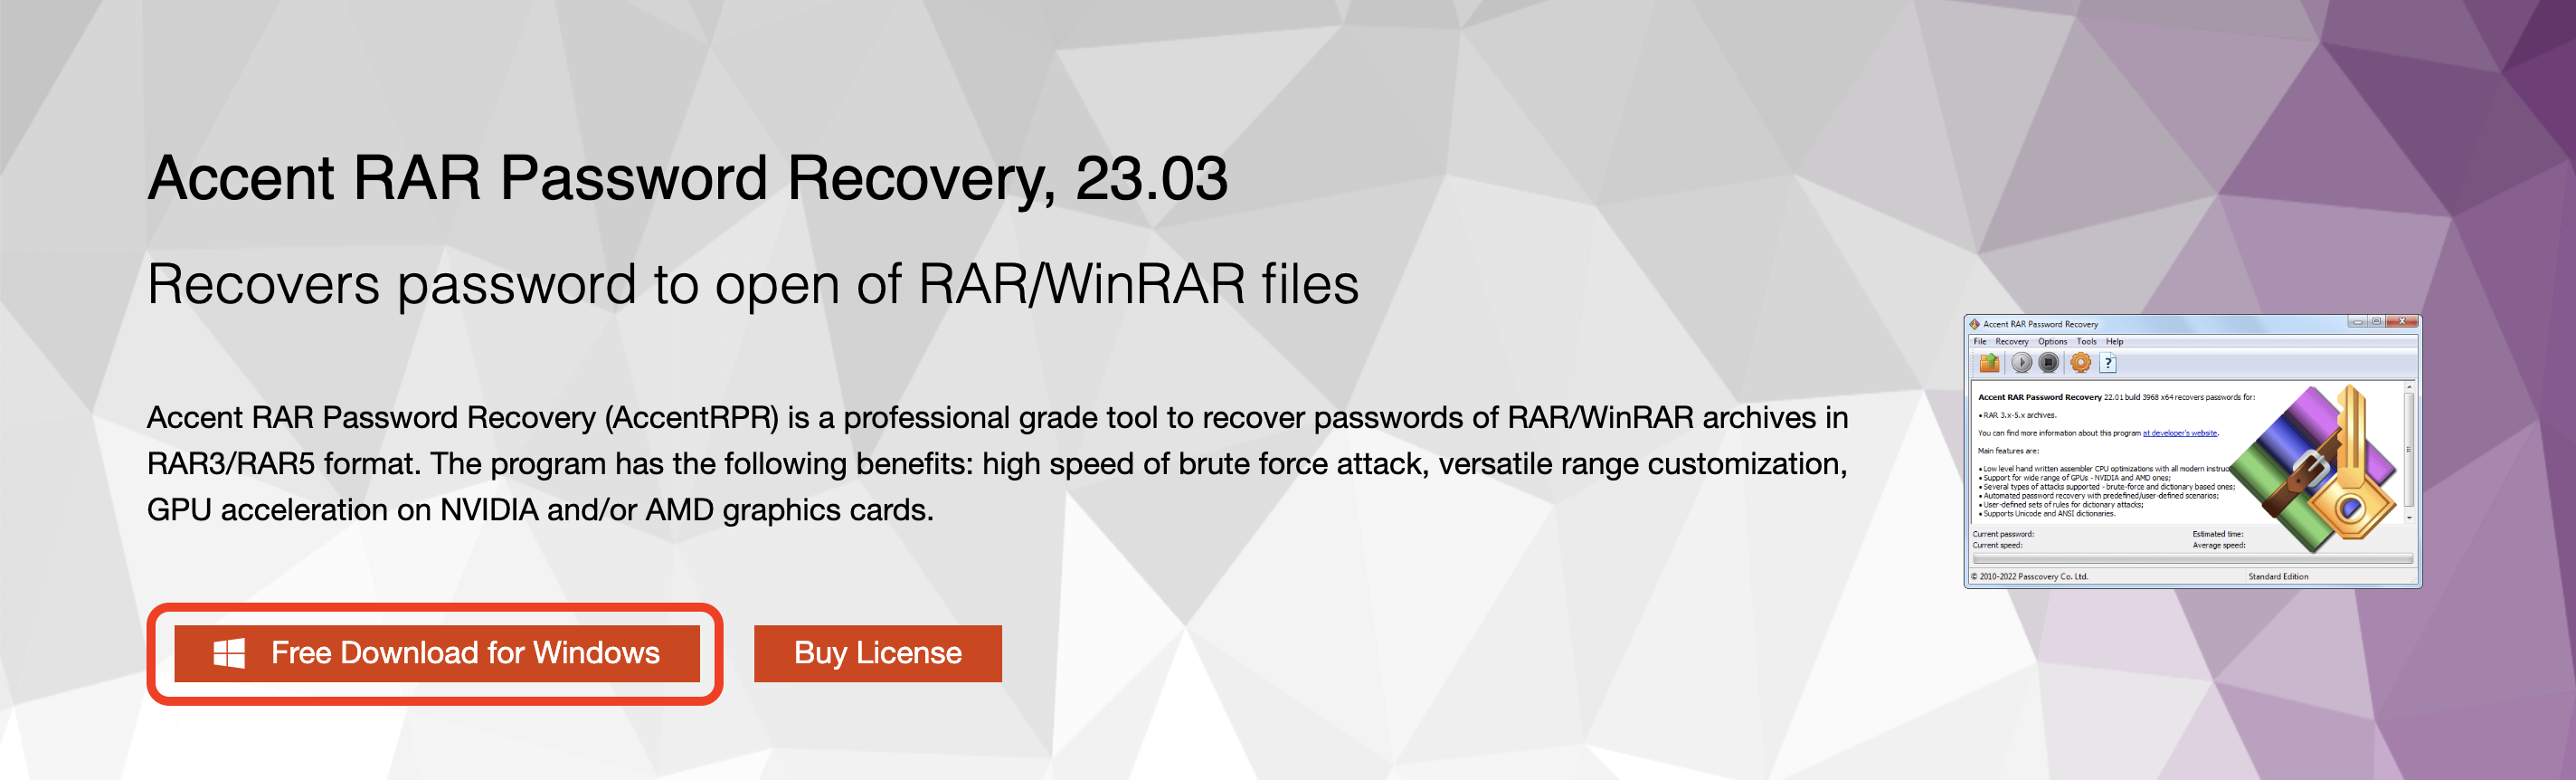 How to Unlock rar Password Using Accent RAR Password Recovery: Step 1